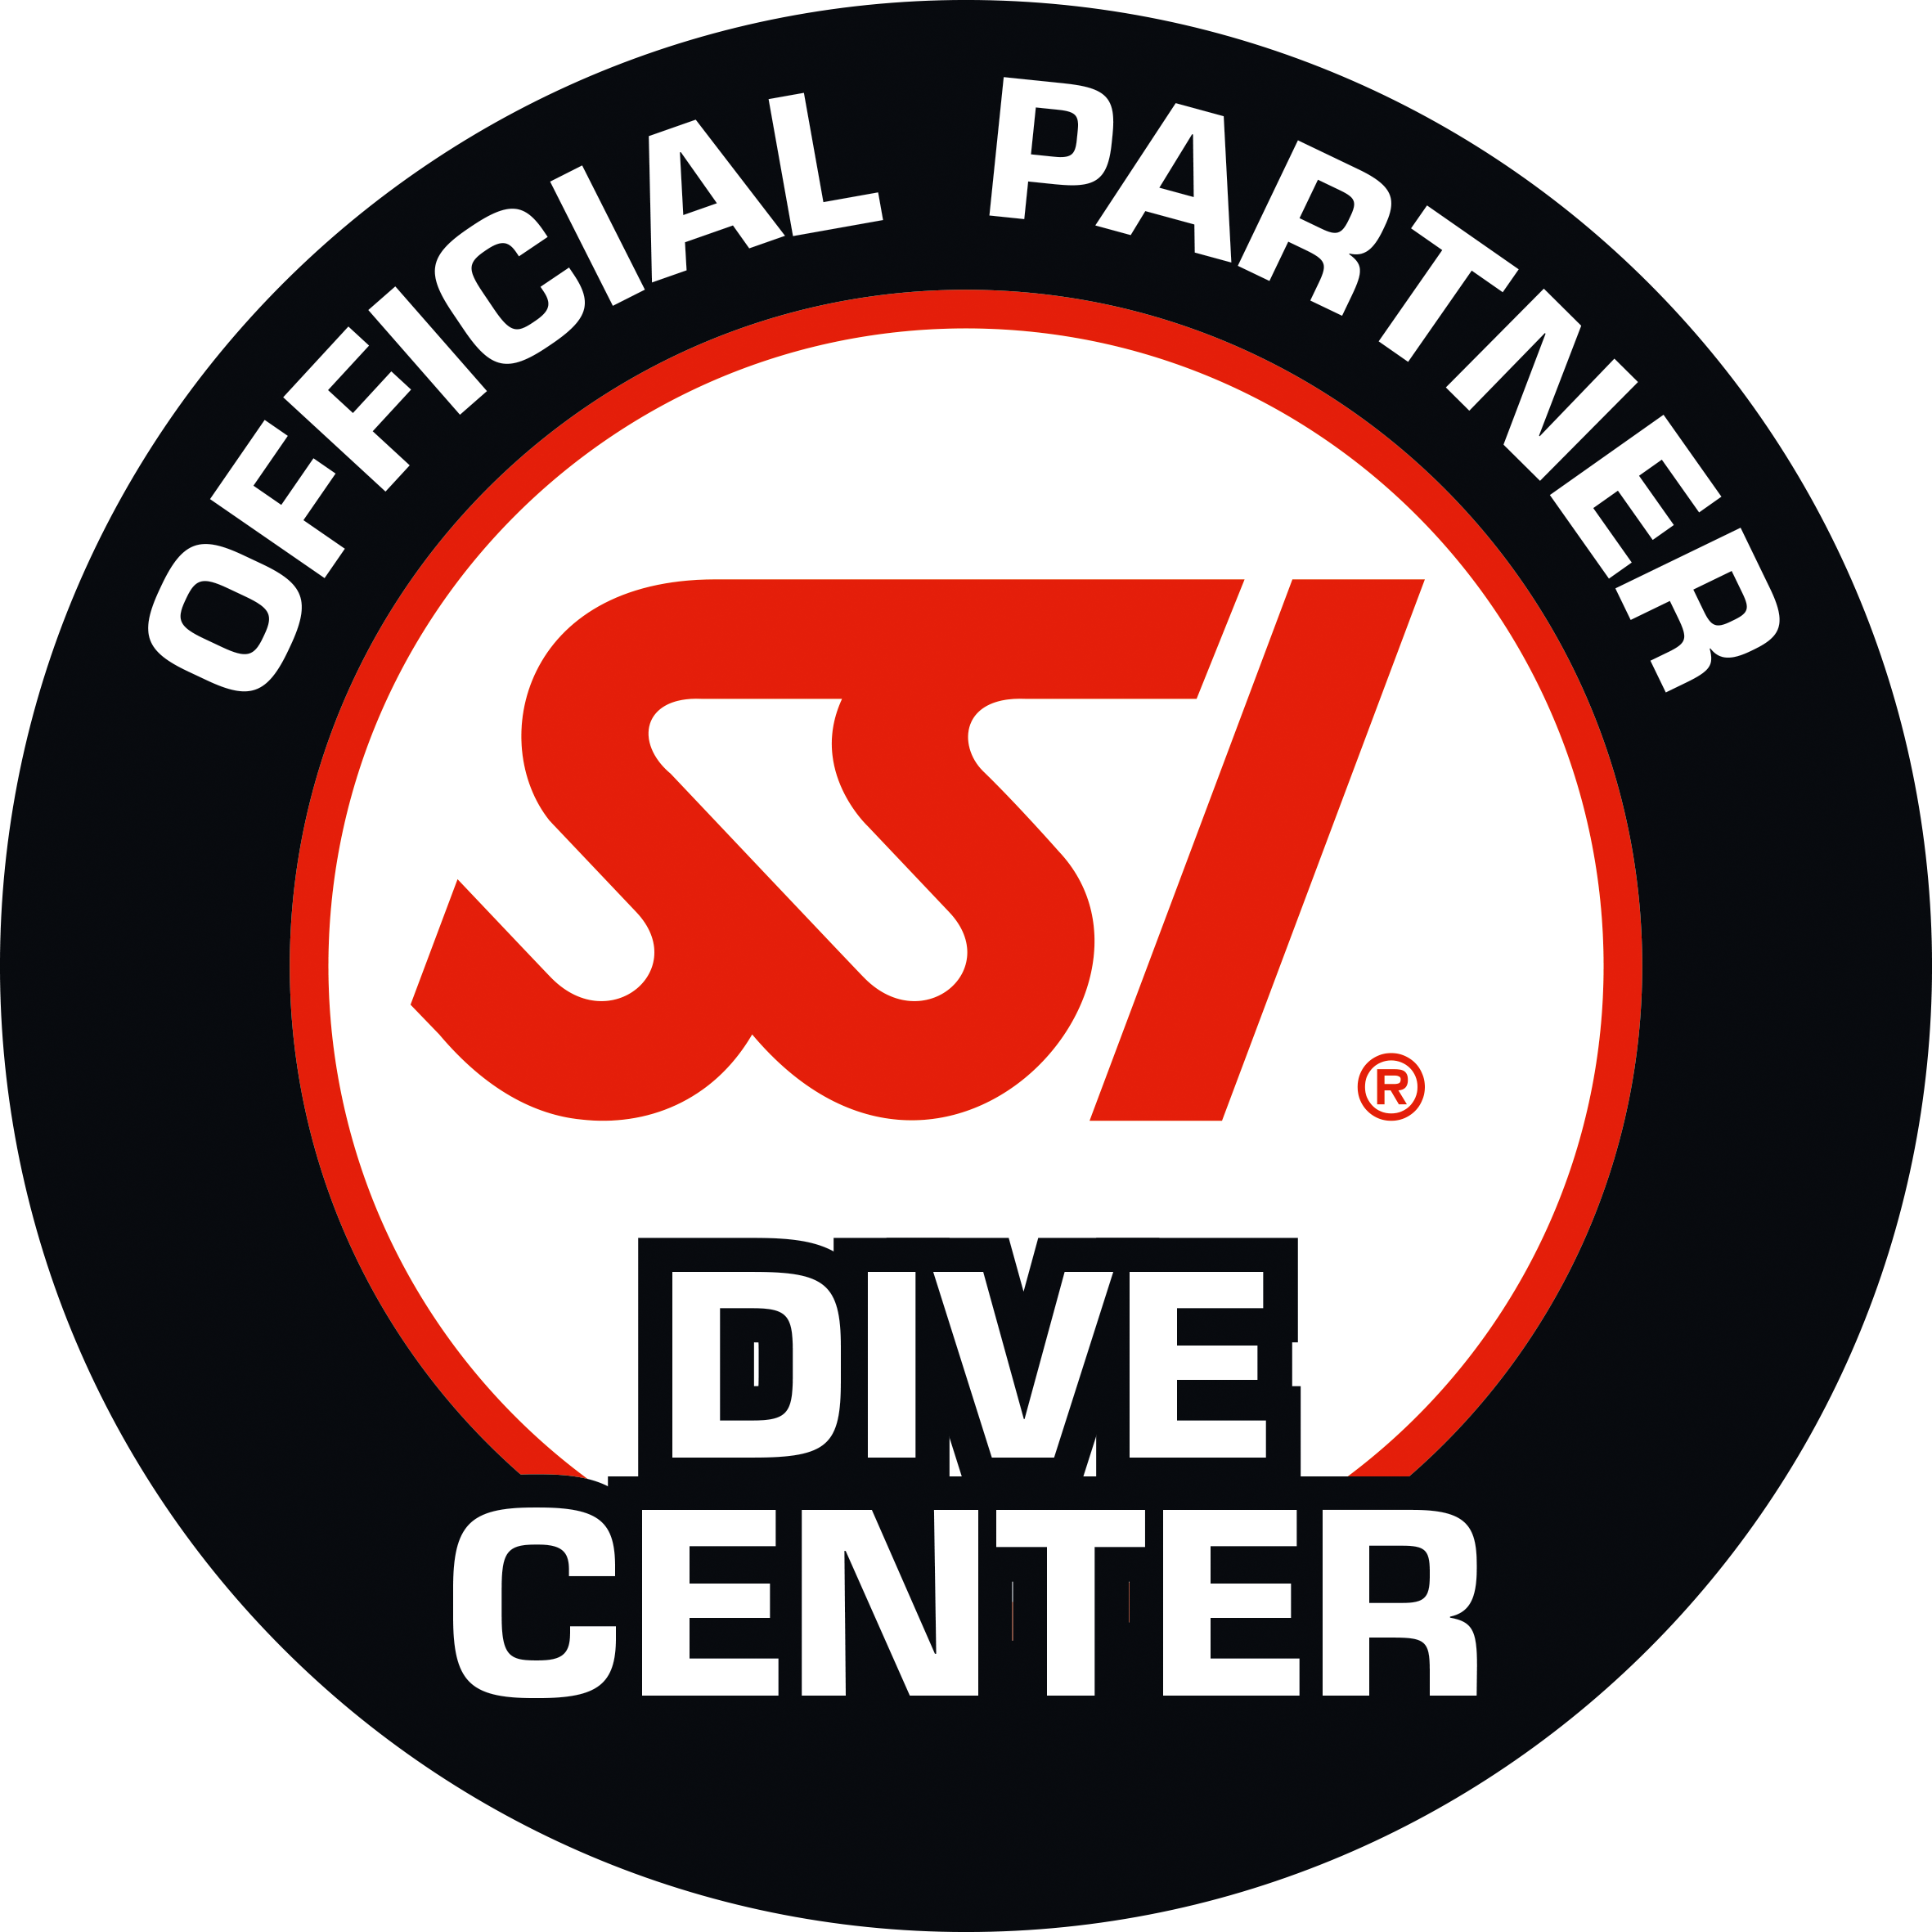 SSI Dive Center